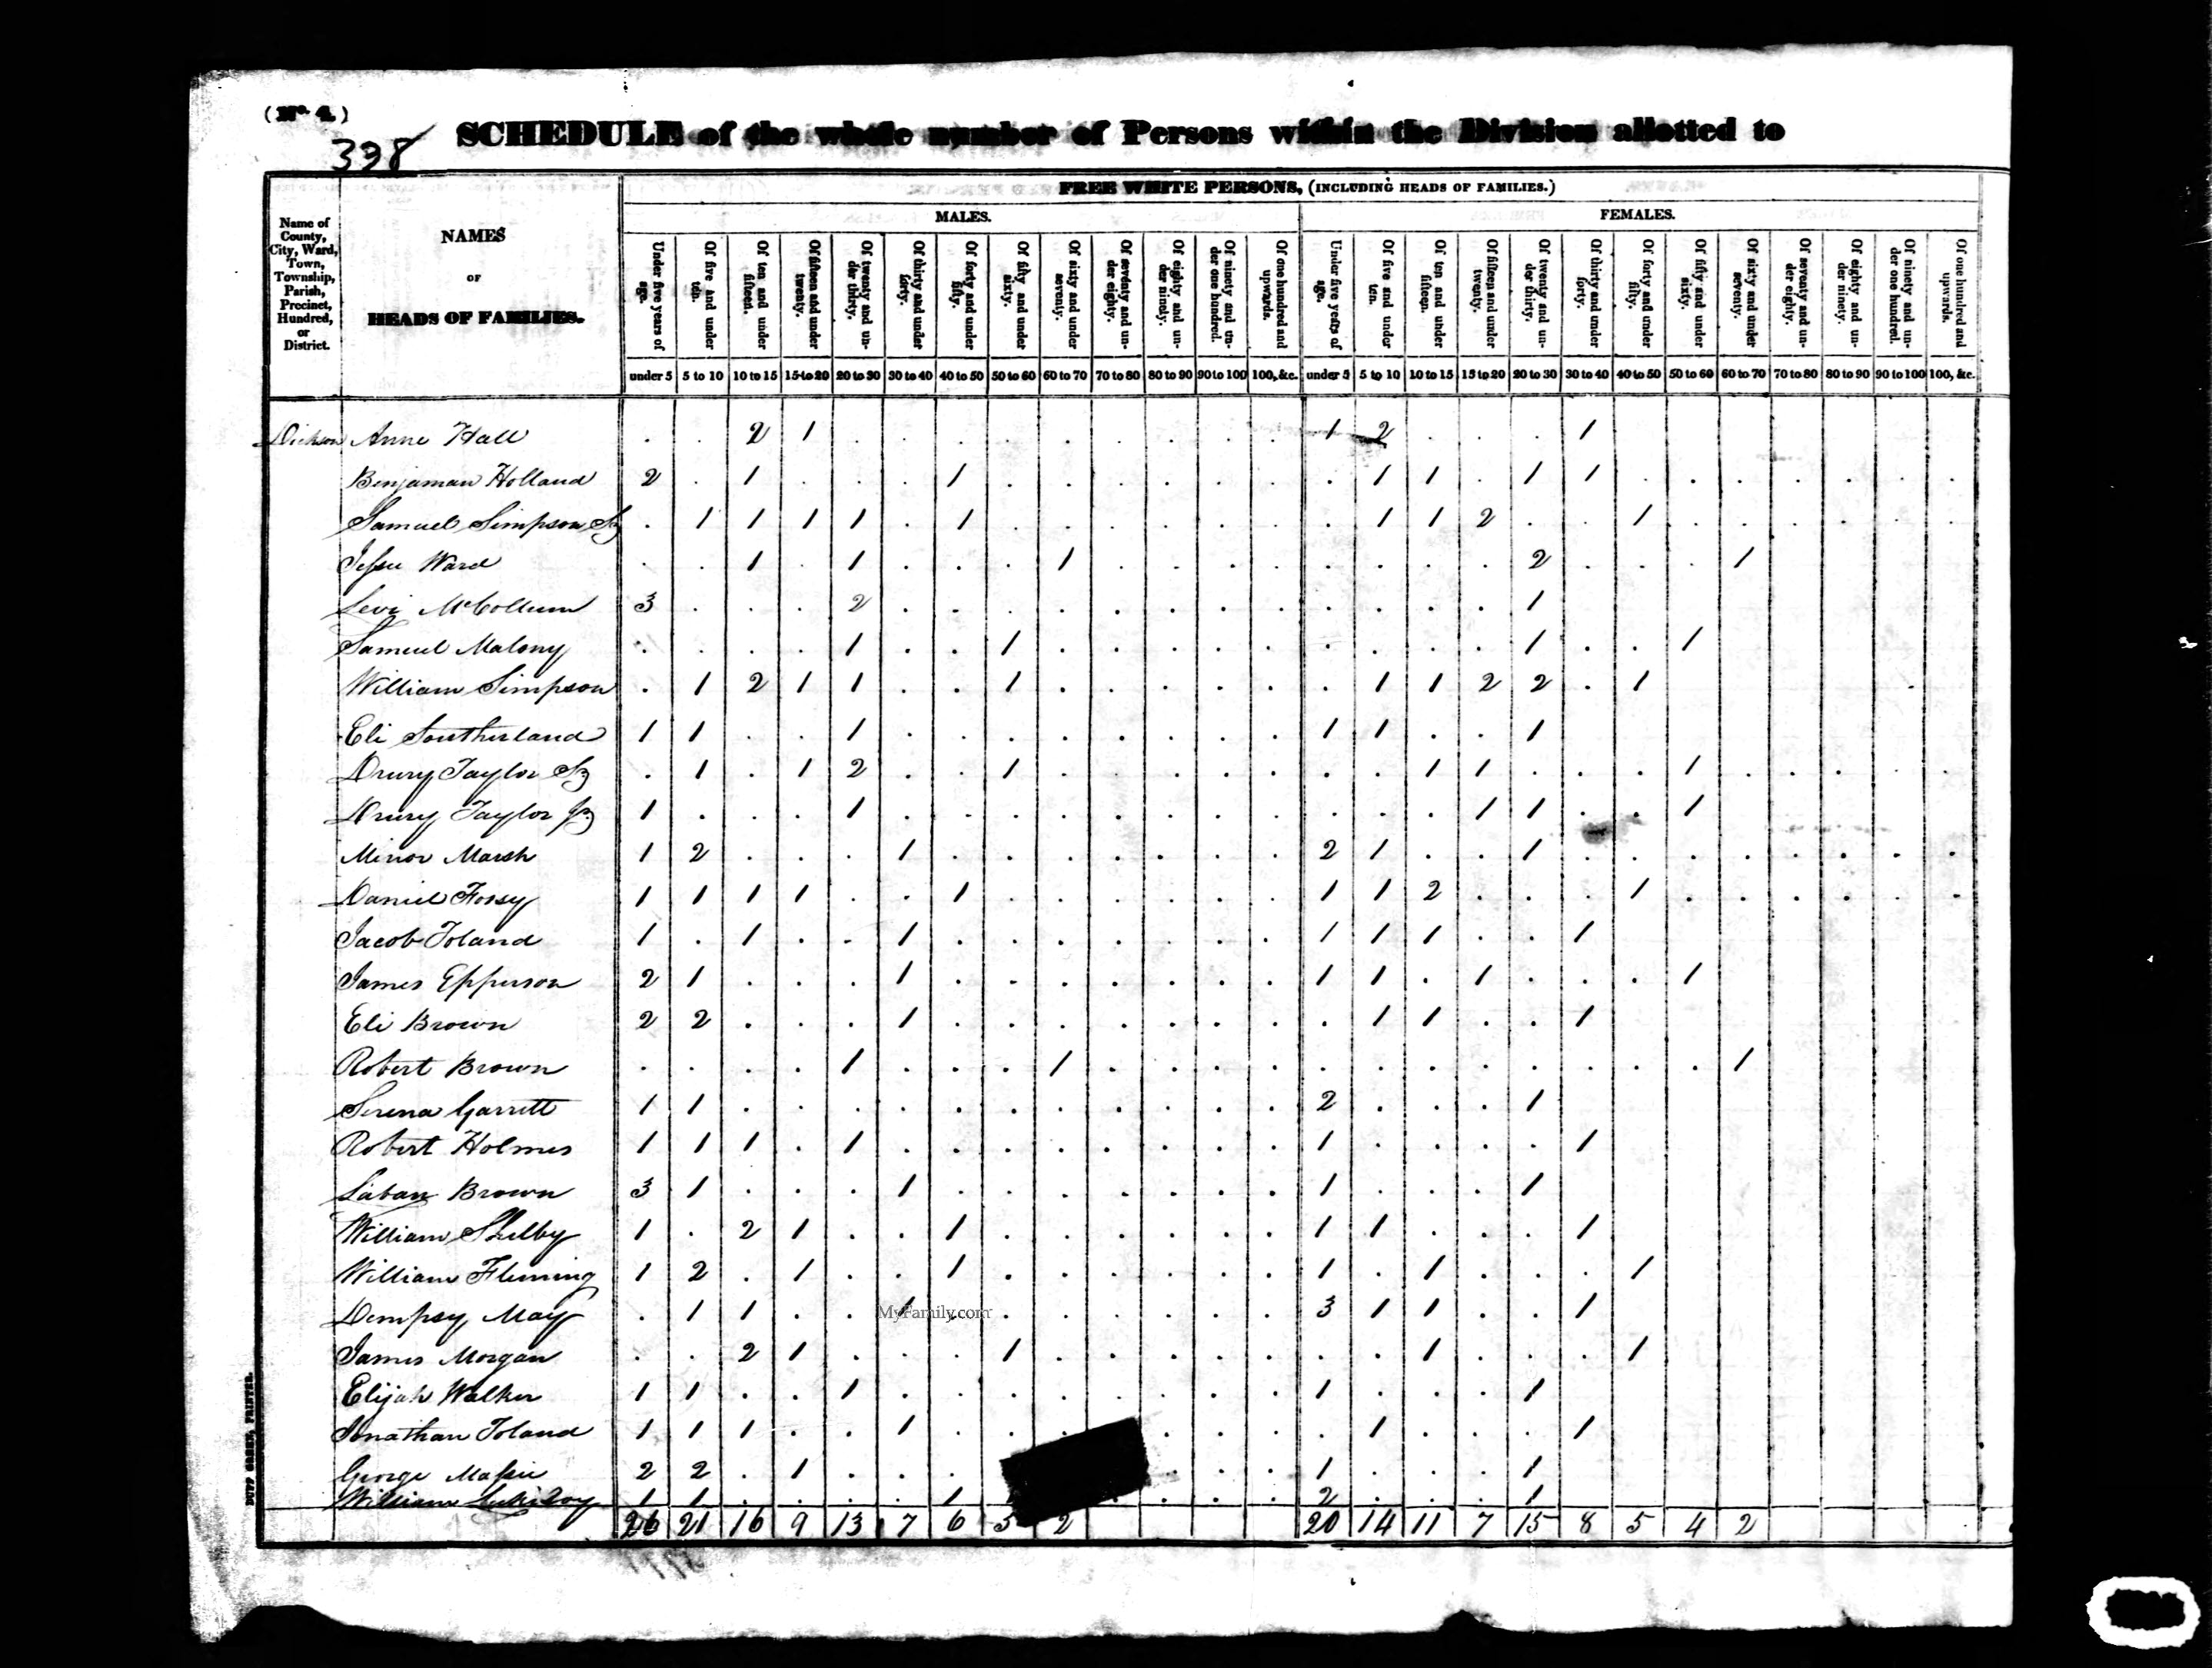 Elijah Walker, 1830 Dickson County, Tennessee, census (p. 1)